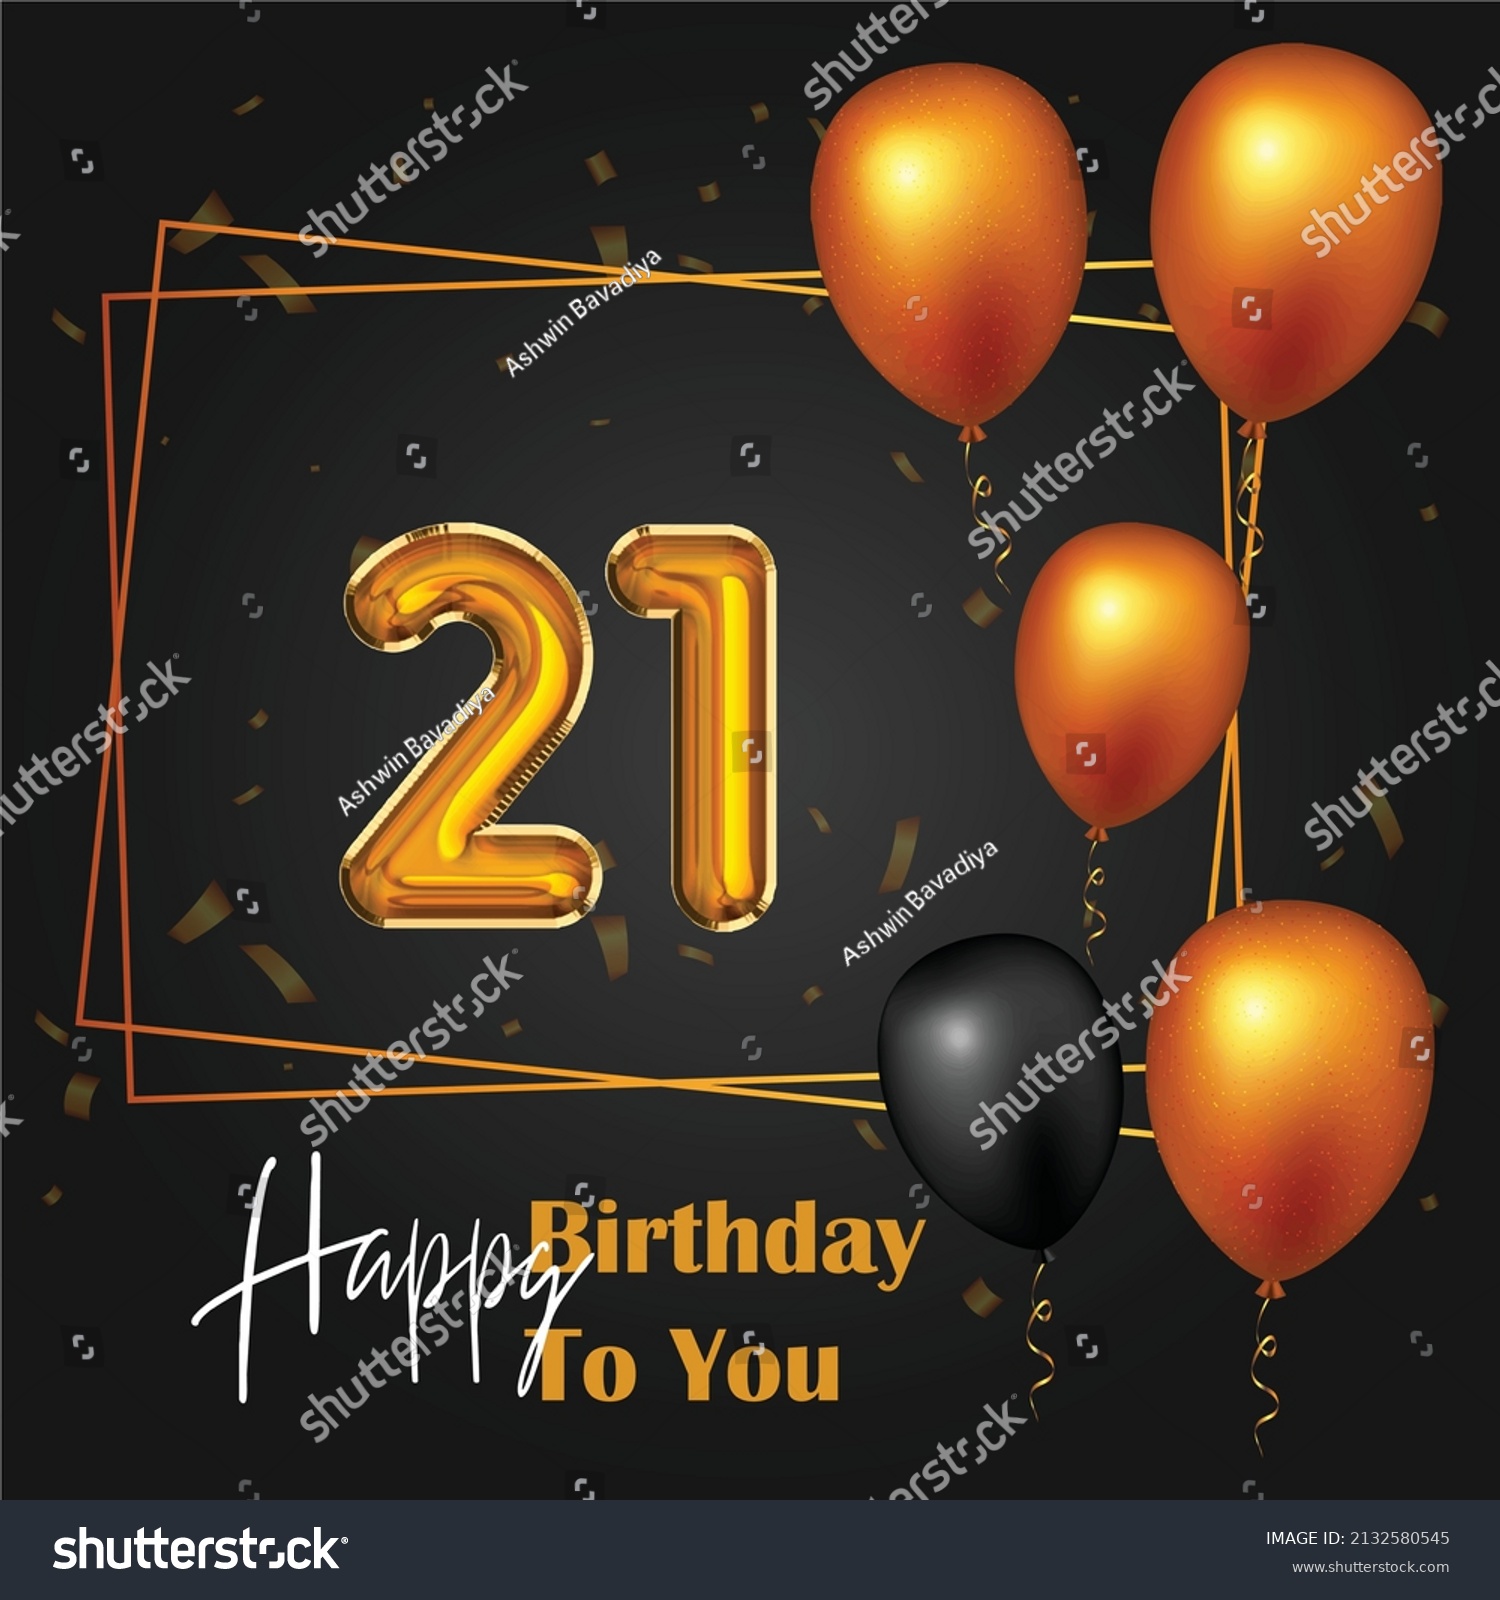 SVG of Happy 21st birthday, greeting card, vector illustration design.
 svg